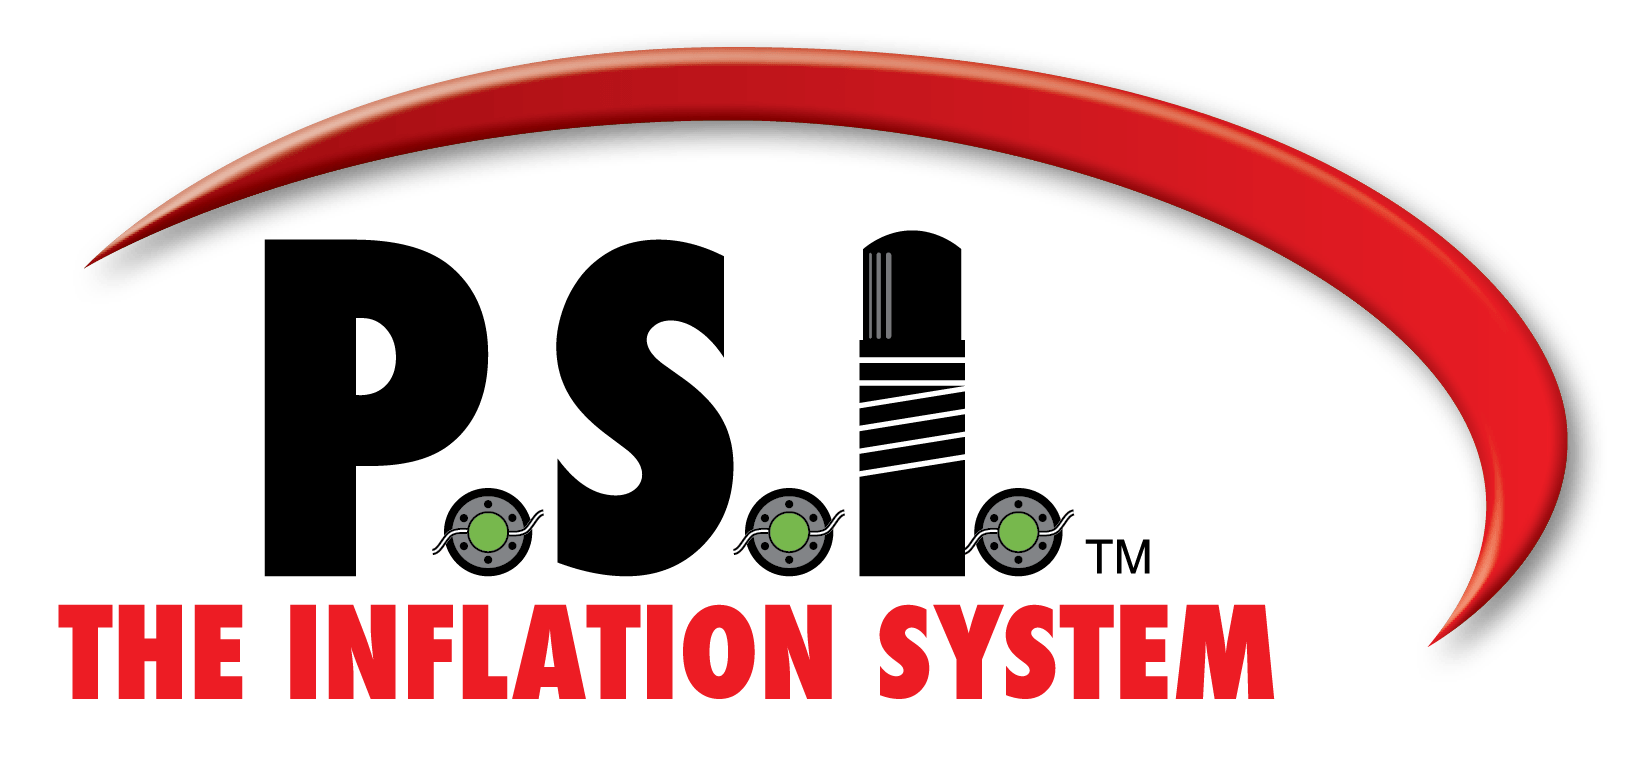 Meritor Logo - Article | PSI